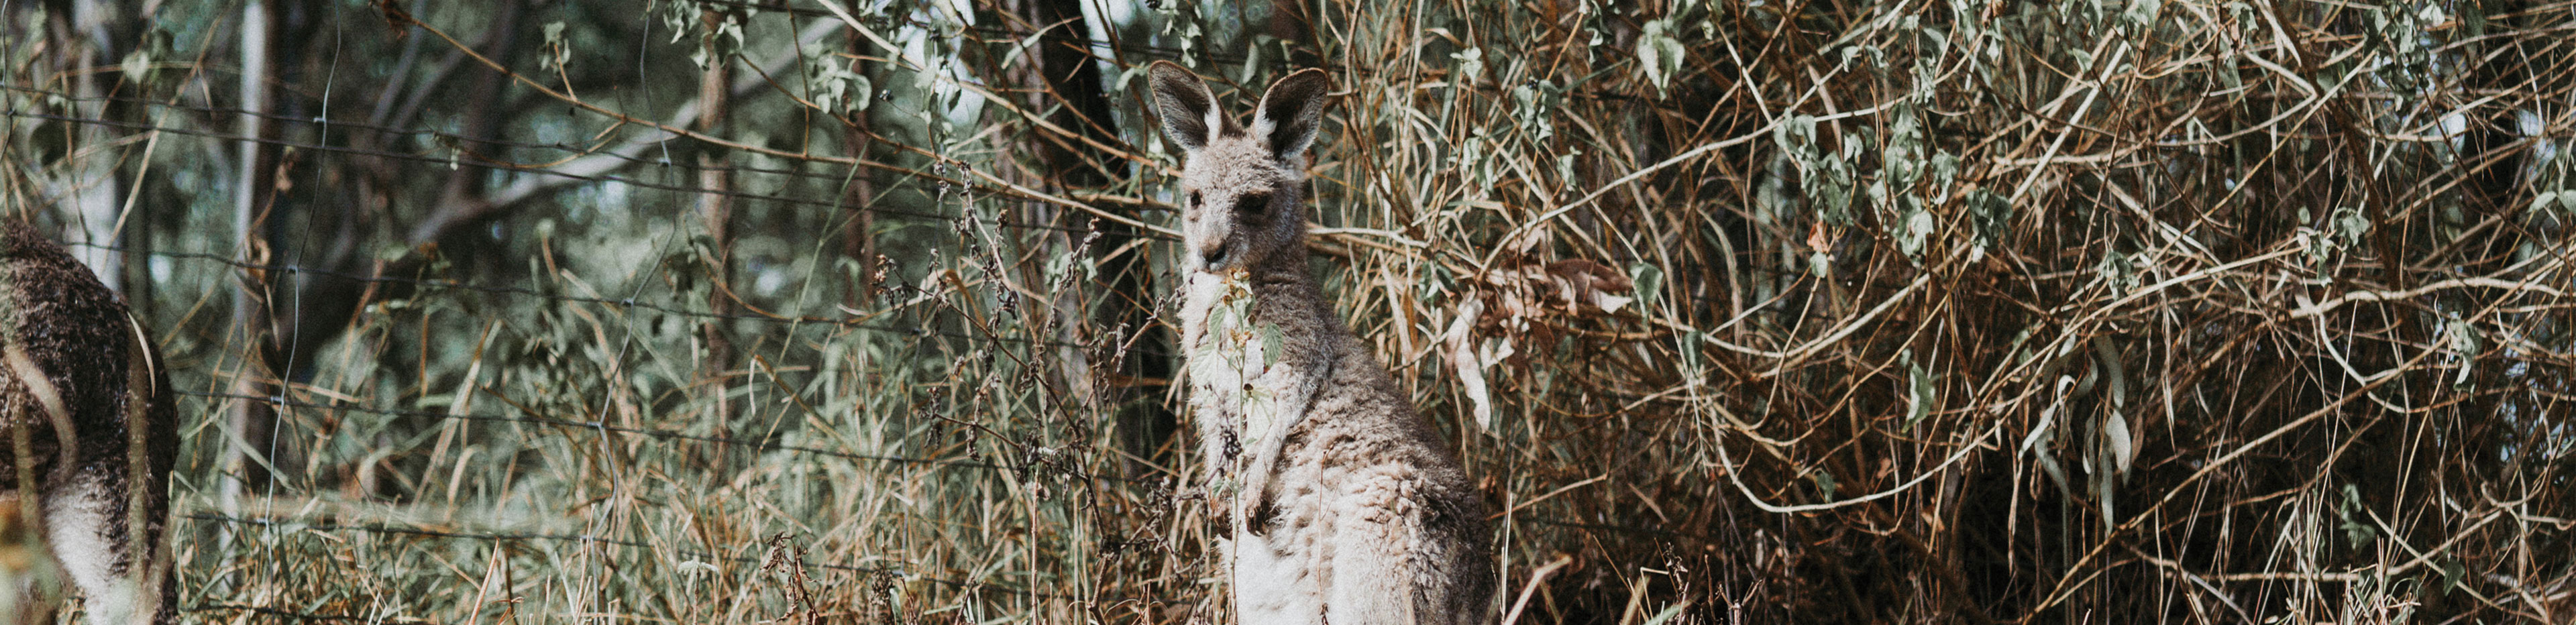 grey kangaroo amongst scrub